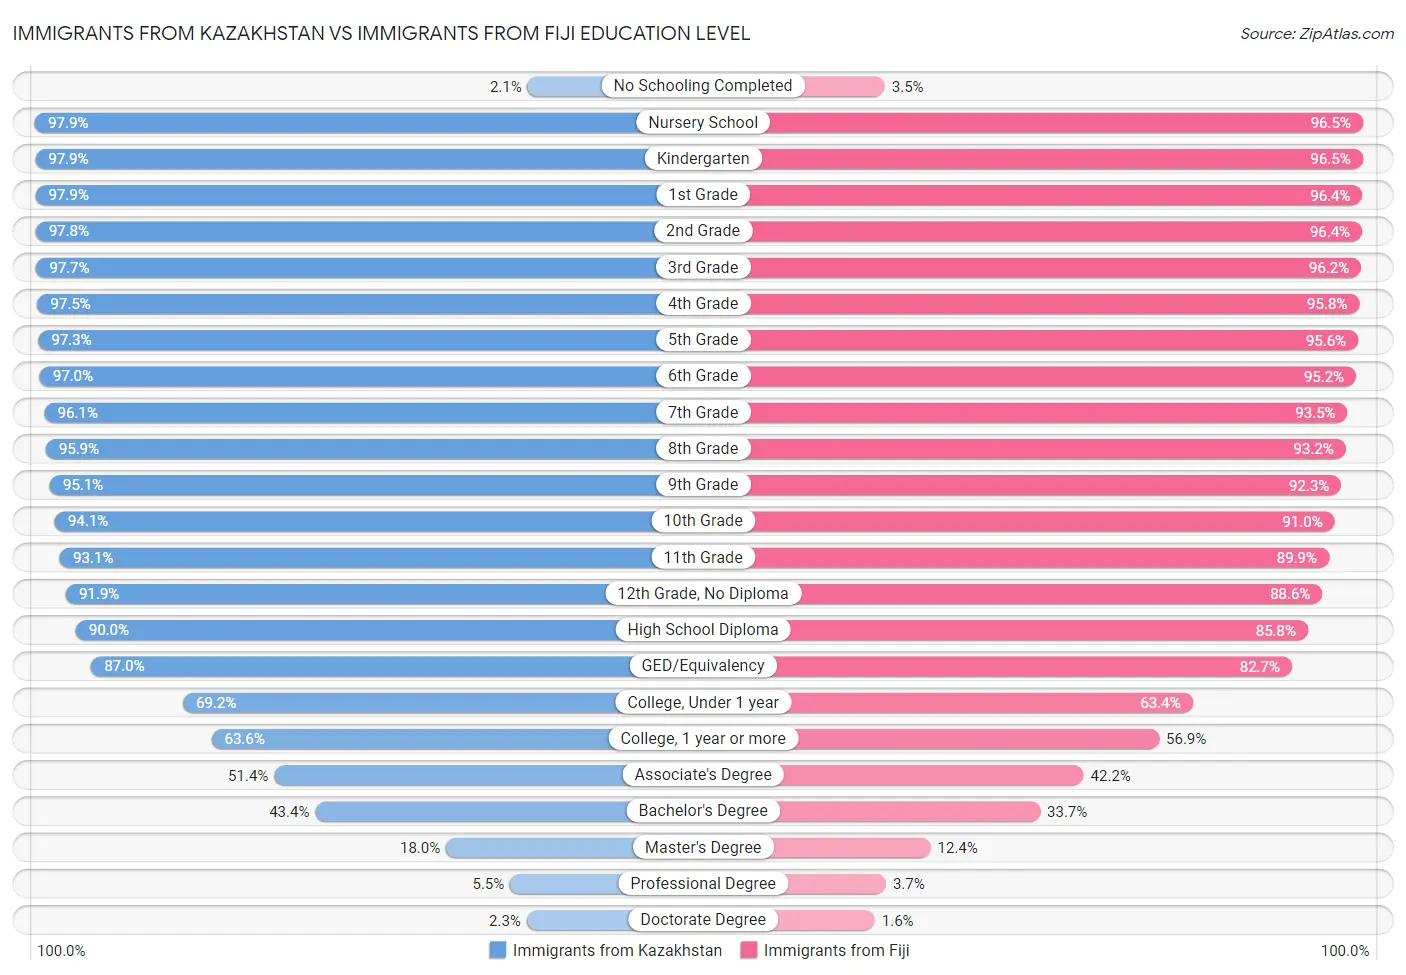 Immigrants from Kazakhstan vs Immigrants from Fiji Education Level